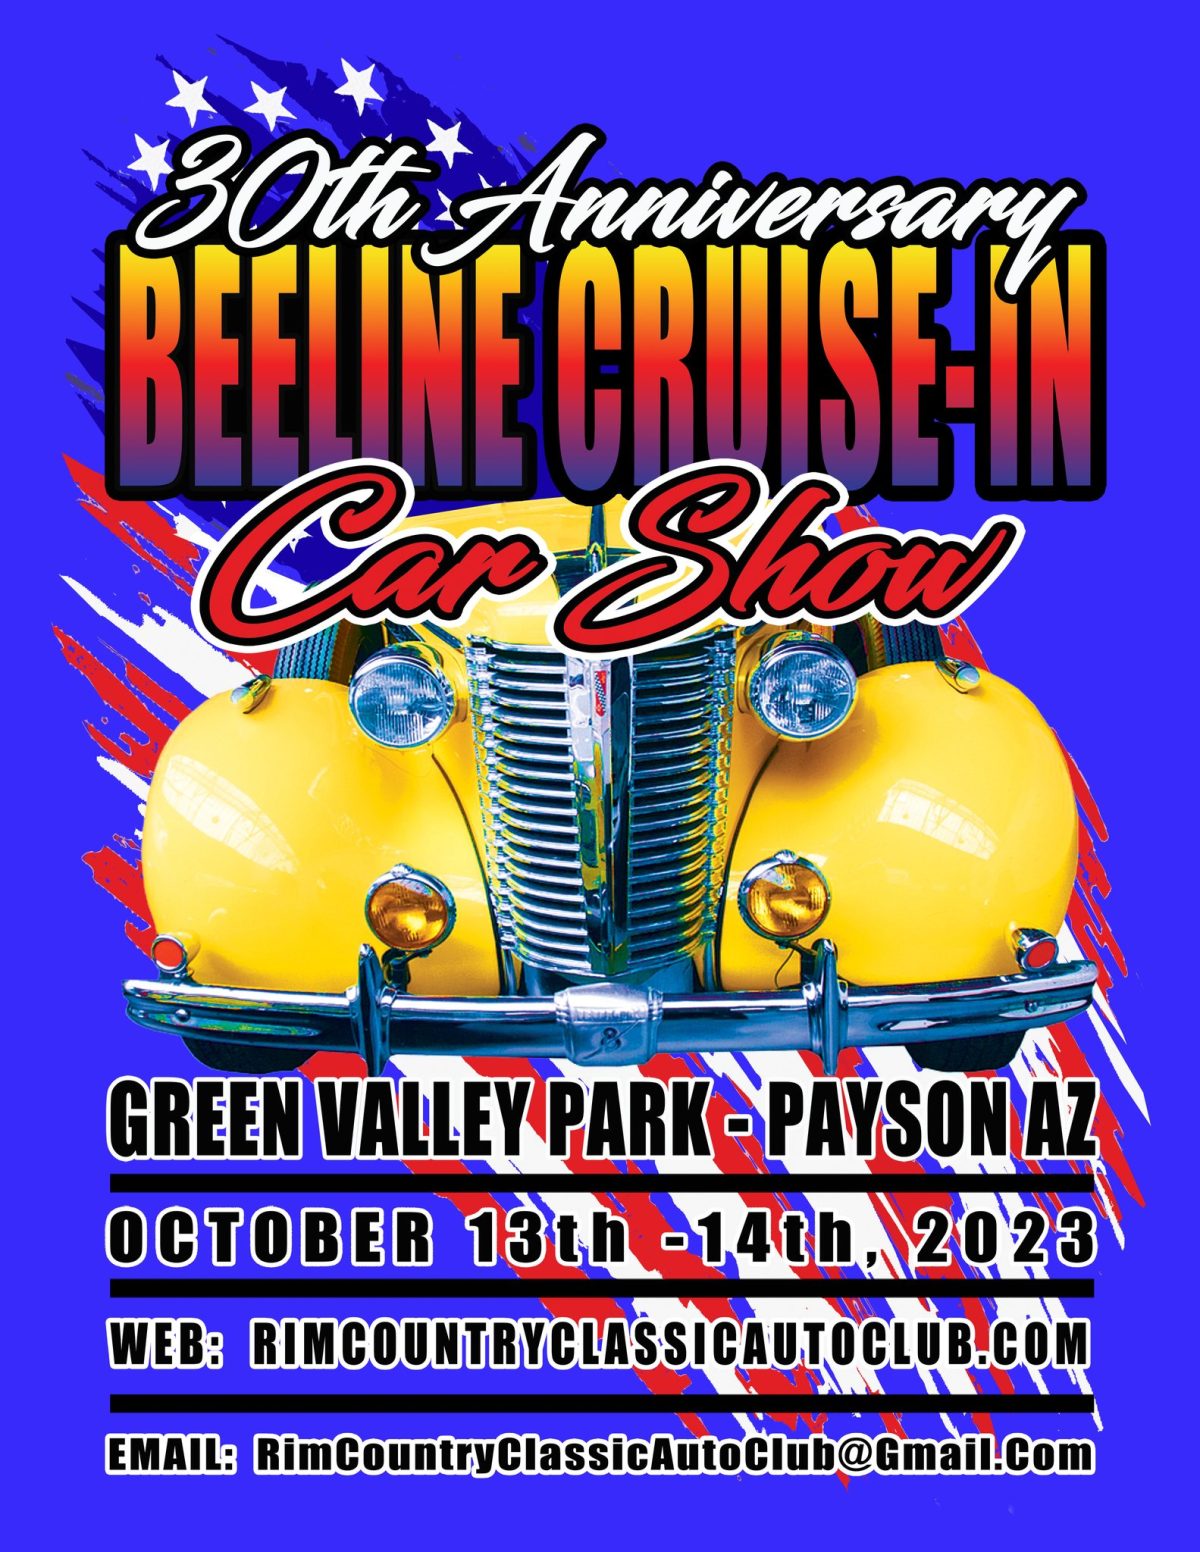 Beeline Cruise-In Car Show